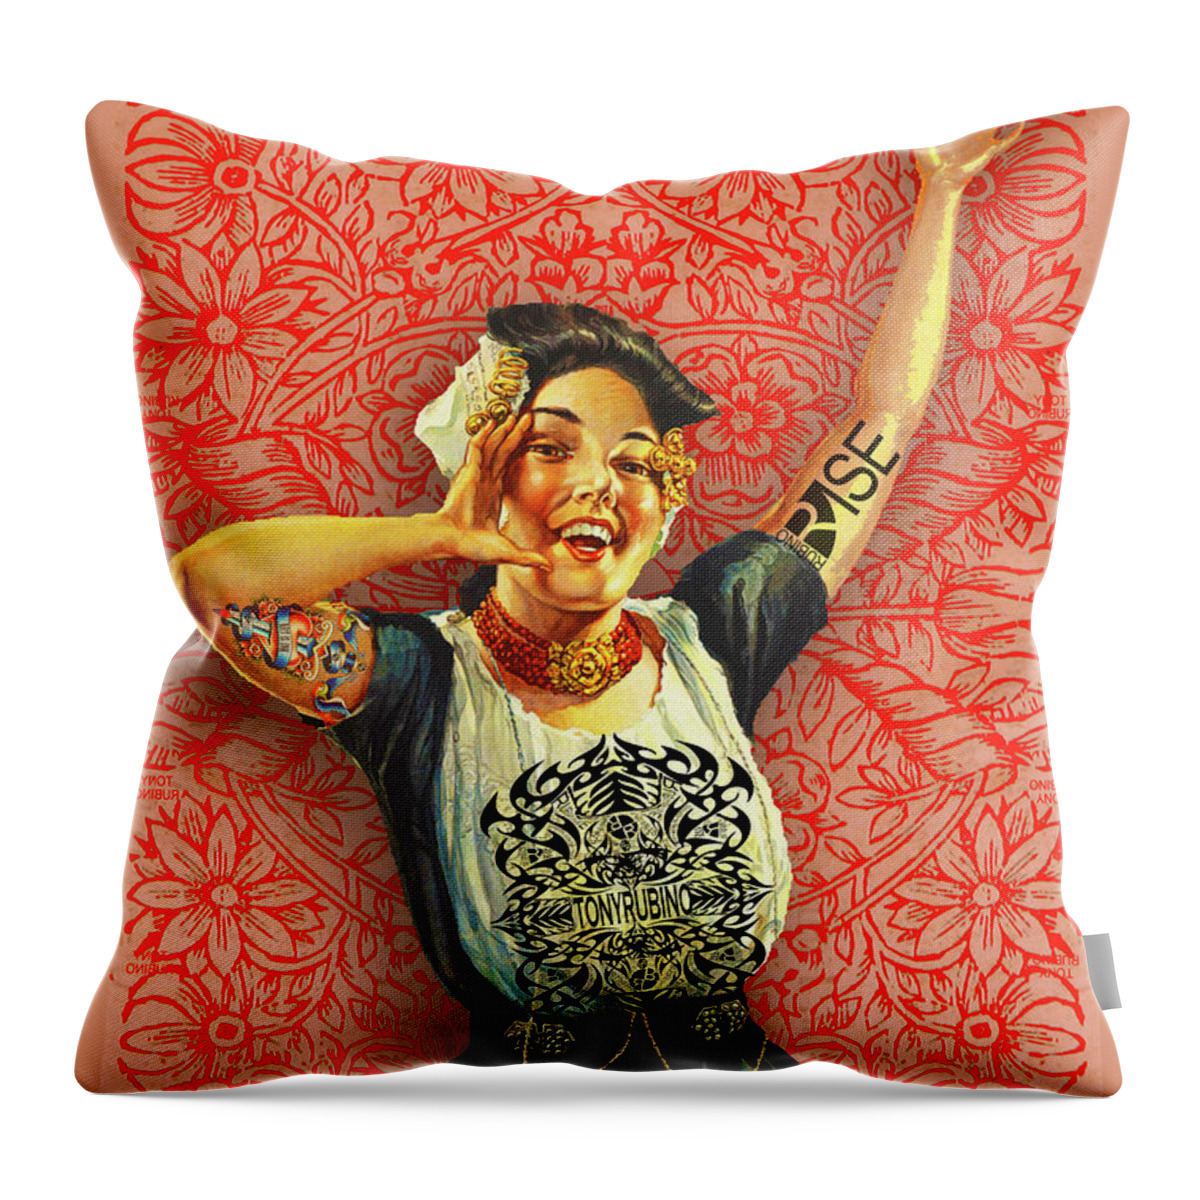 Hand Throw Pillow featuring the mixed media Rubino Rise Woman by Tony Rubino